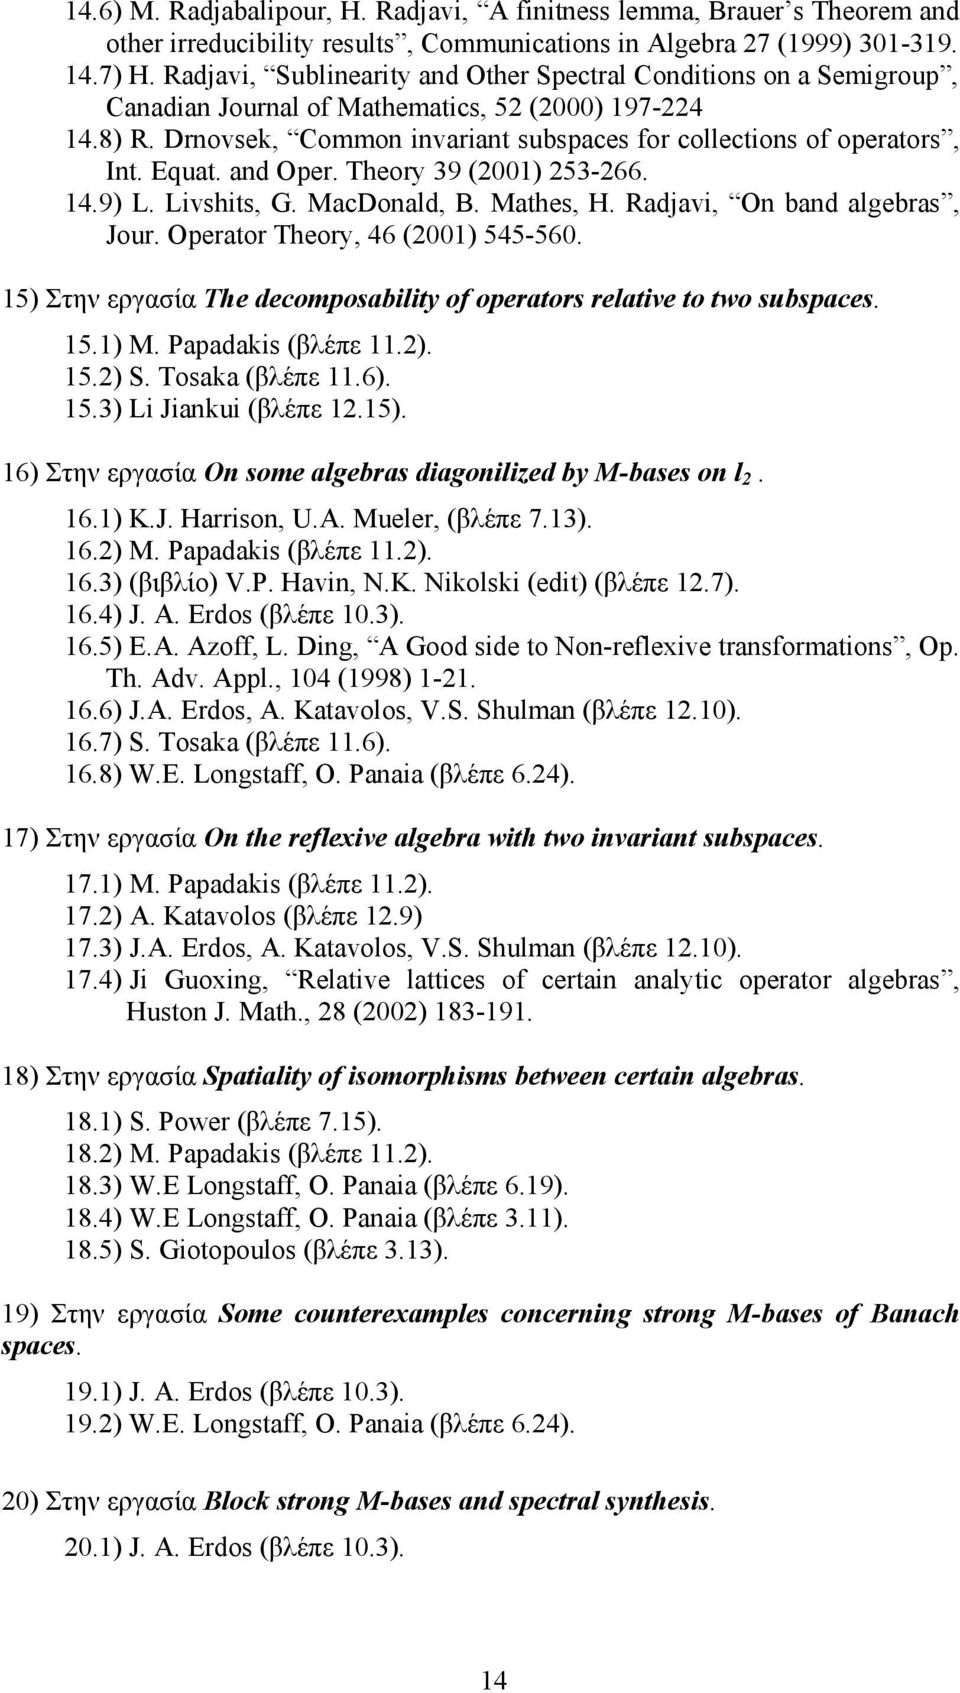 Equat. and Oper. Theory 39 (2001) 253-266. 14.9) L. Livshits, G. MacDonald, B. Mathes, H. Radjavi, On band algebras, Jour. Operator Theory, 46 (2001) 545-560.